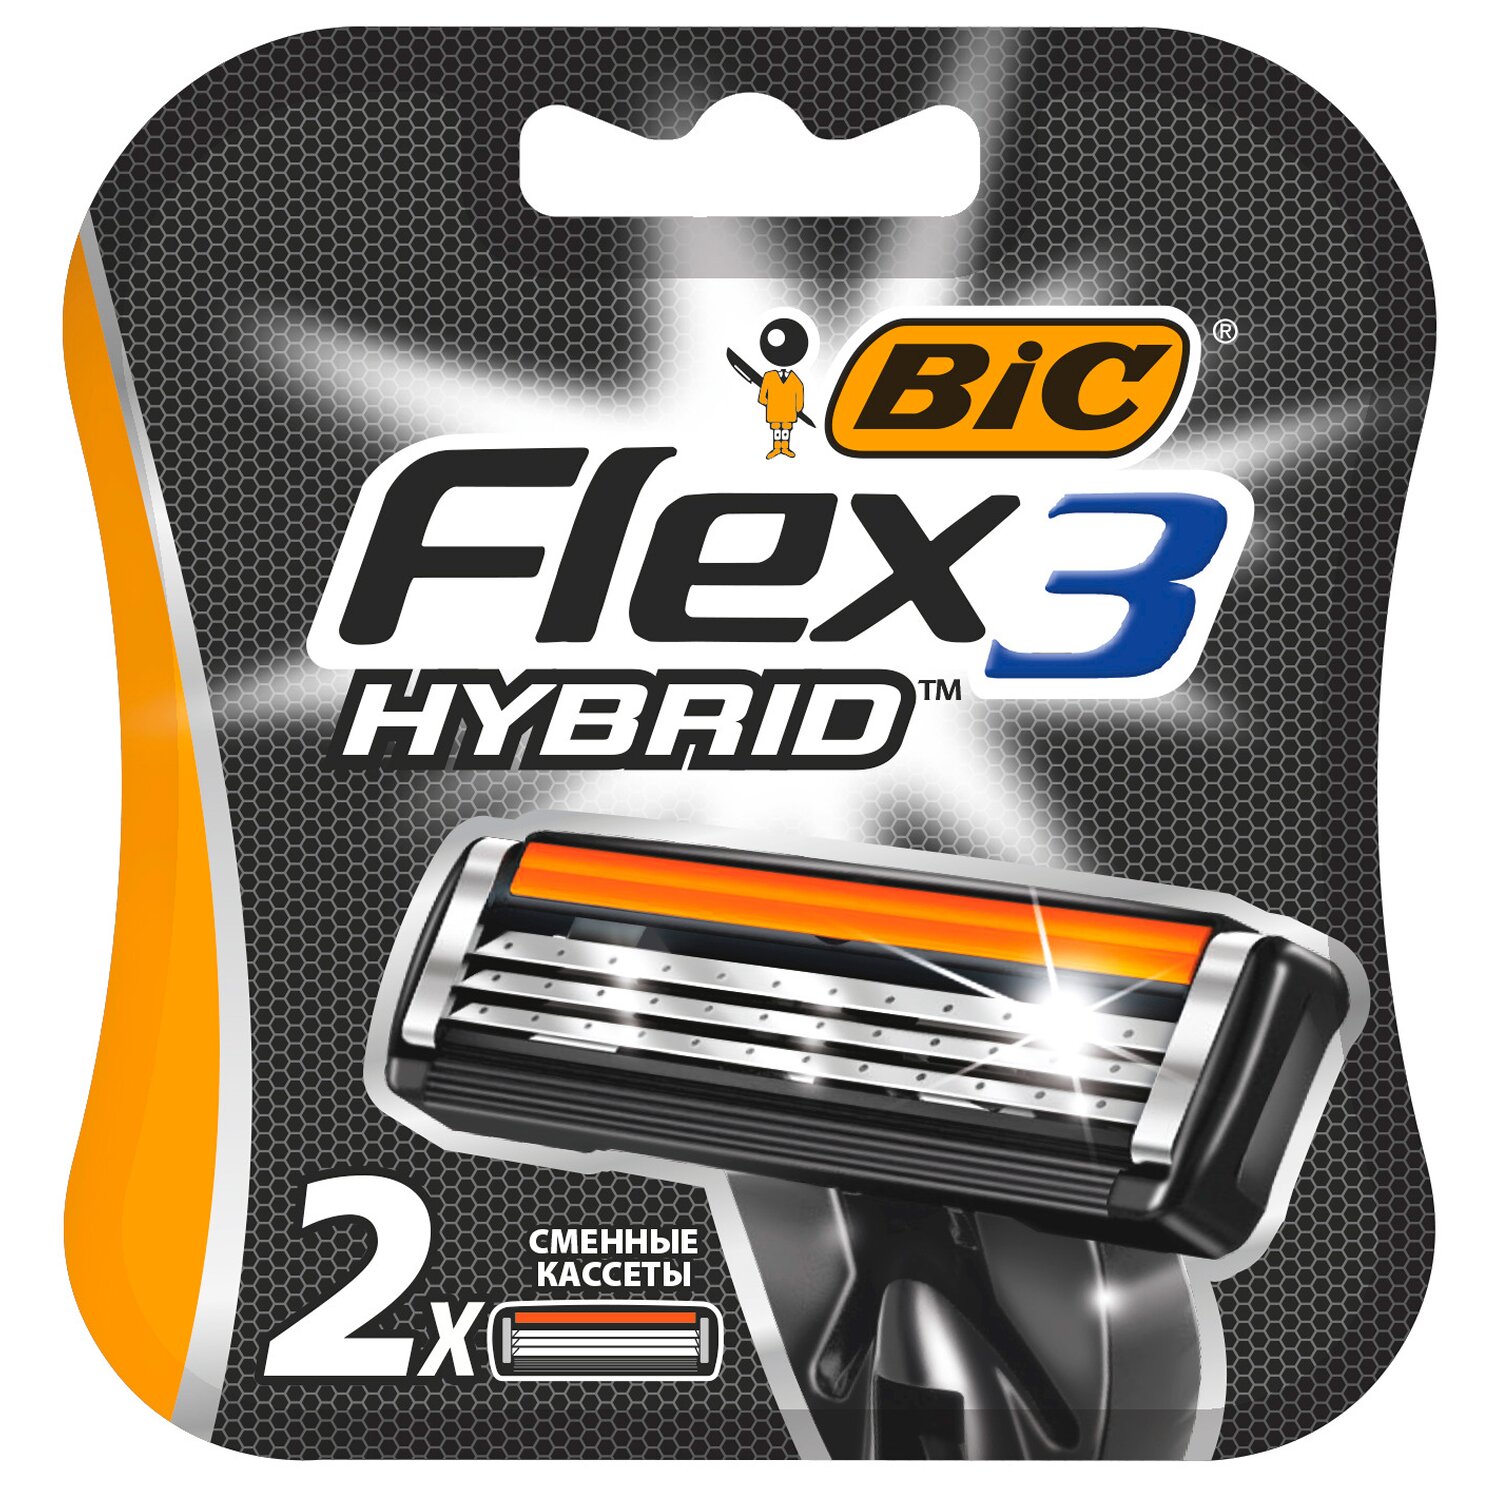     / Bic Flex 3 Hybrid -     2 